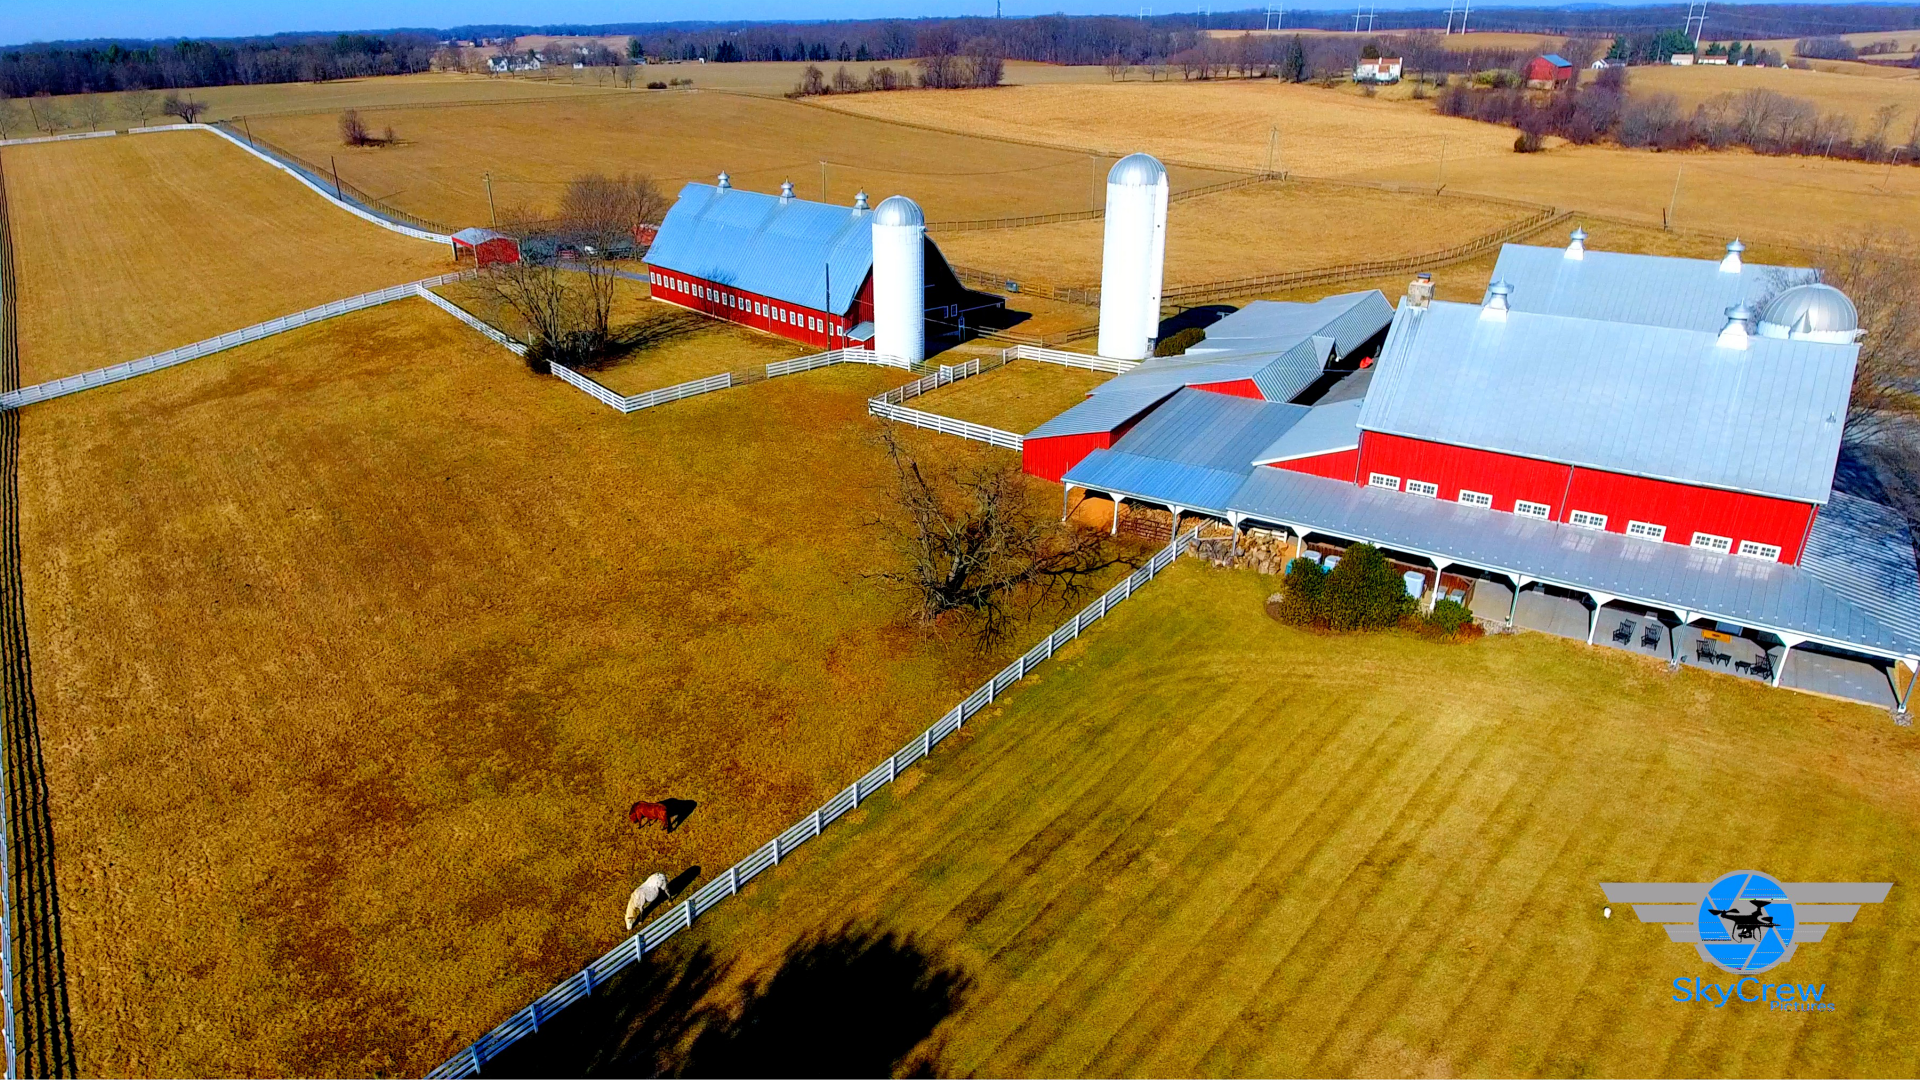 Aerial view for a farm/events venue